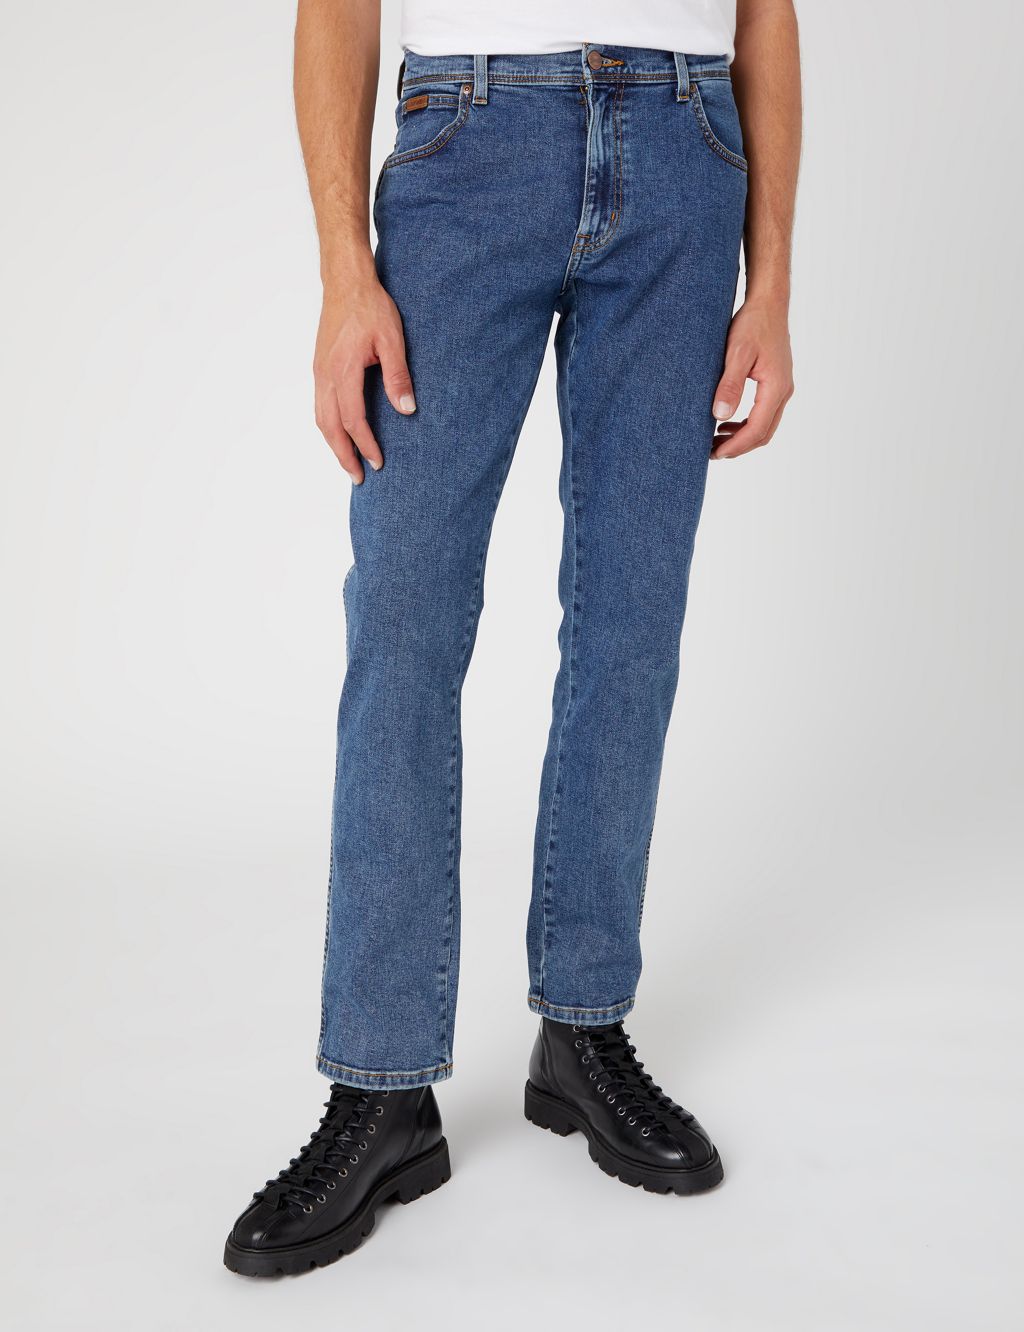 Texas Slim Fit 5 Pocket Jeans image 1